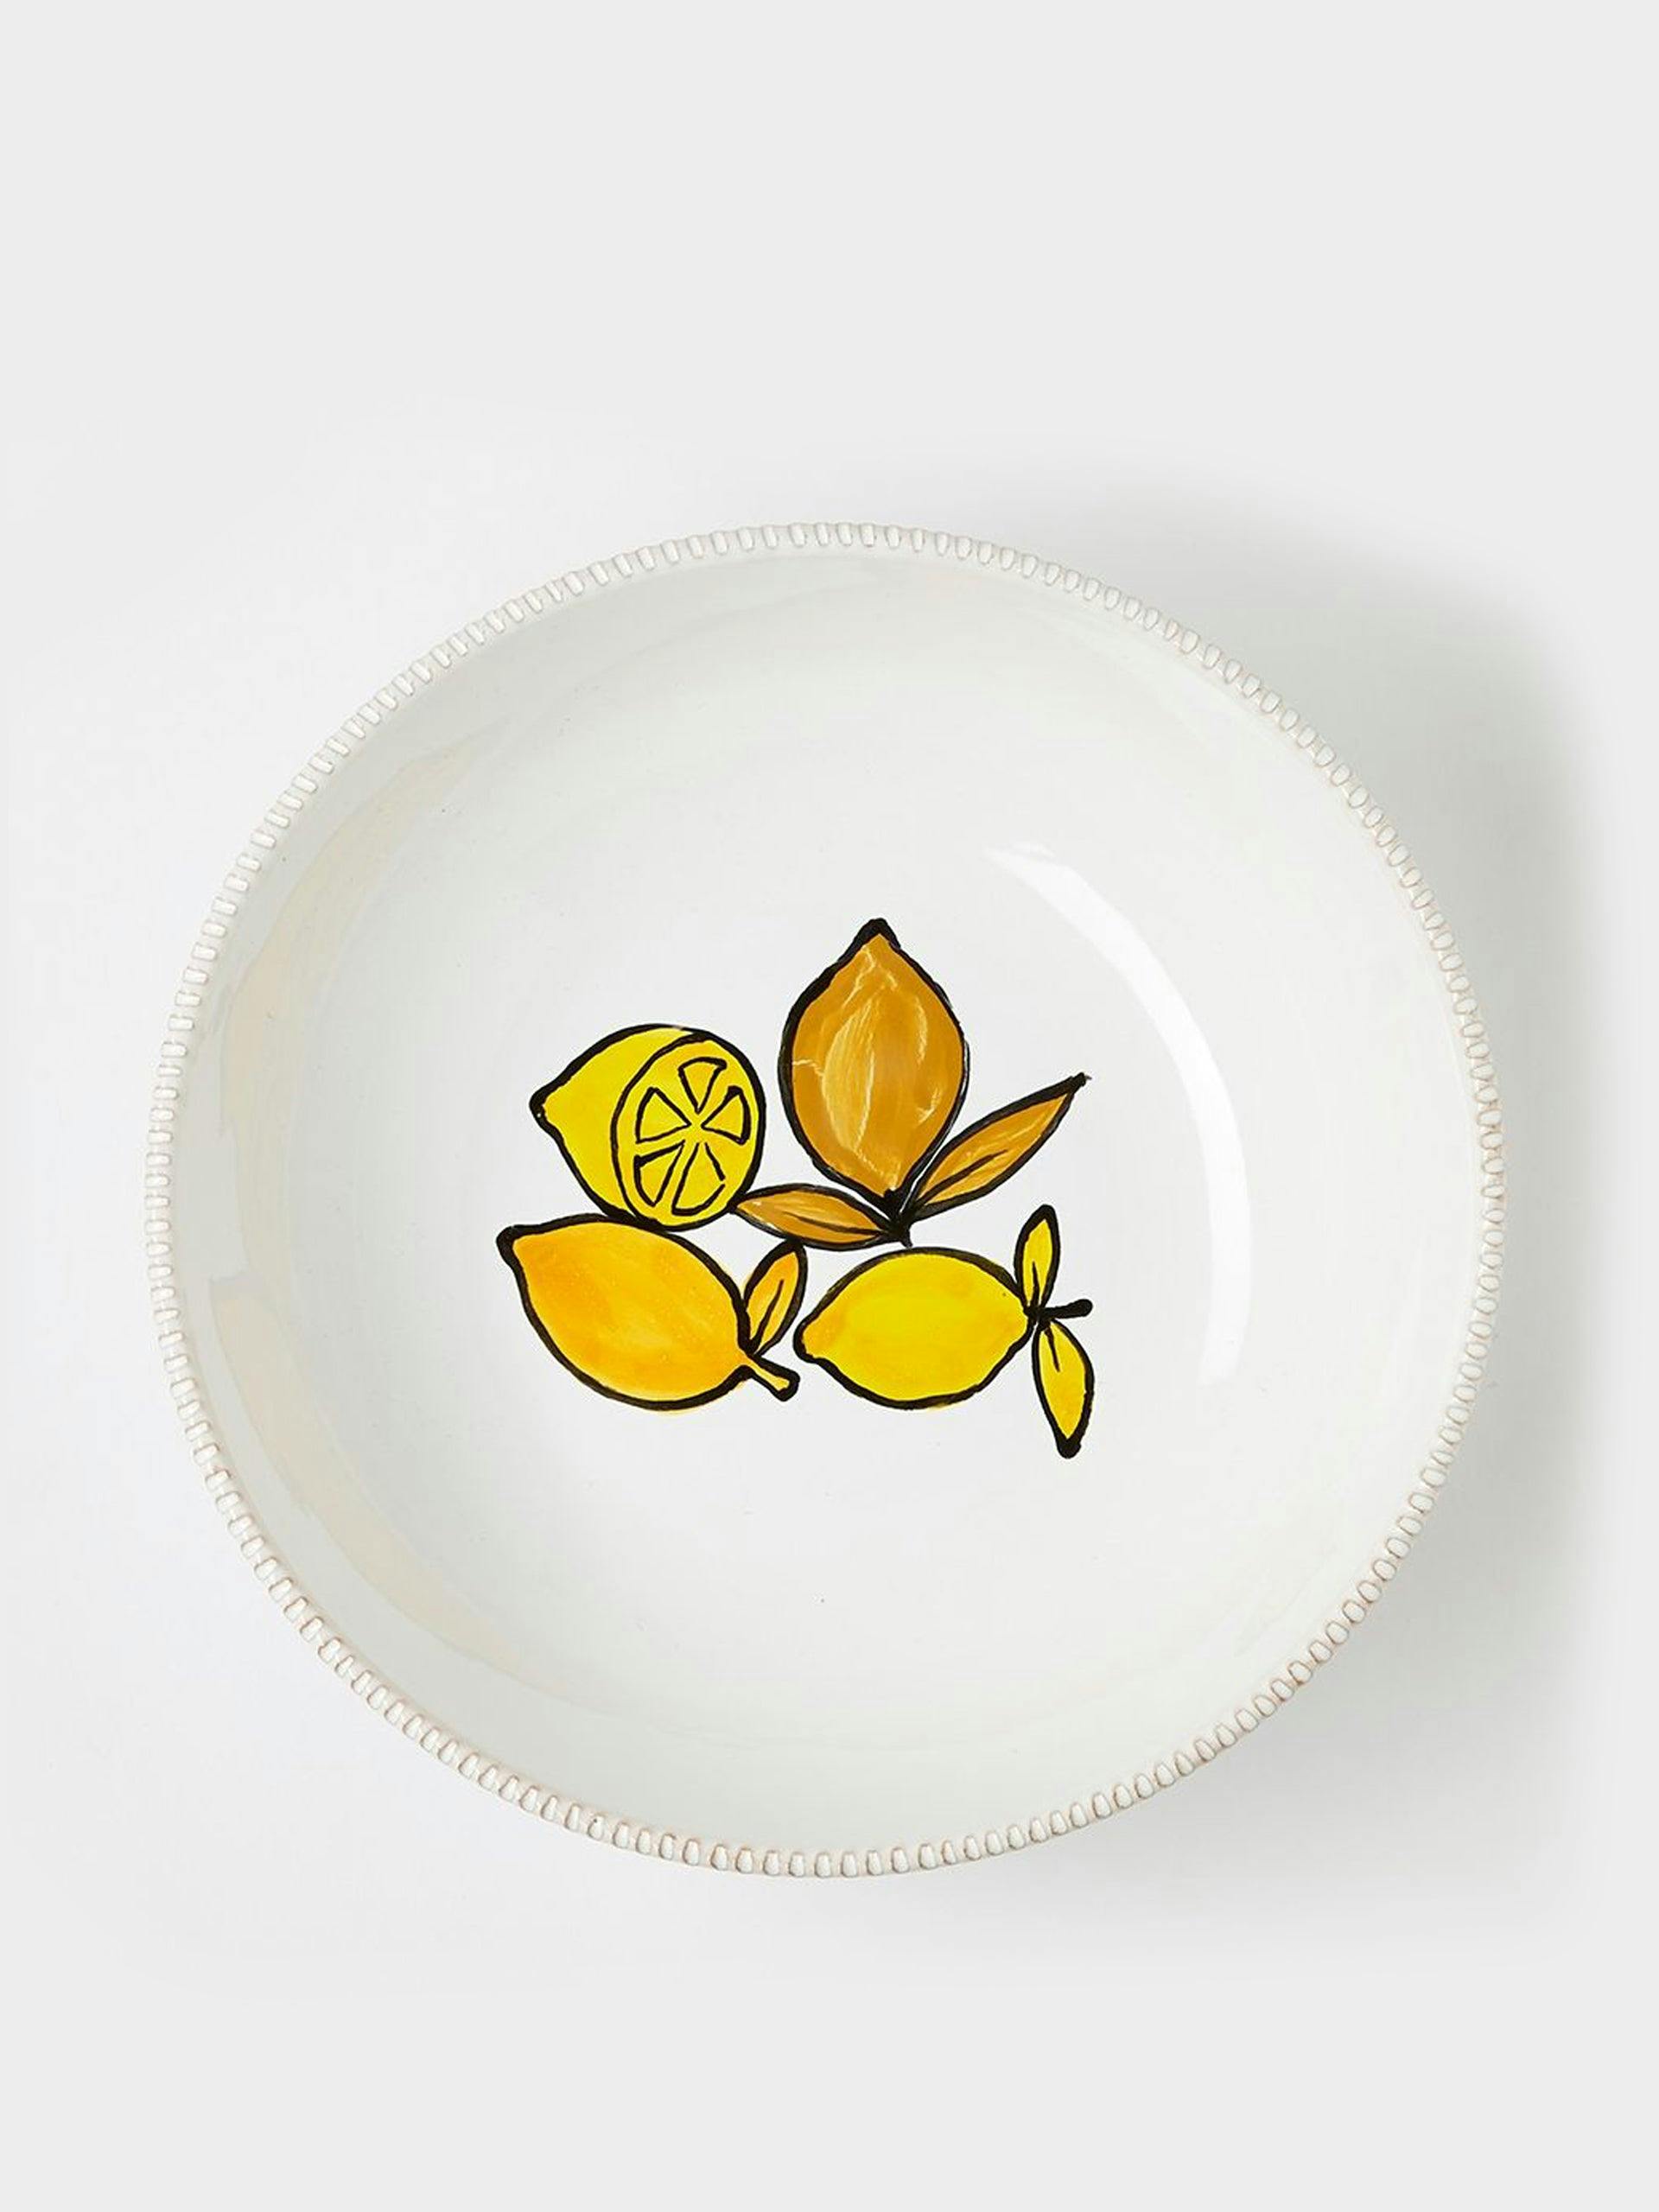 Lemon serving bowl